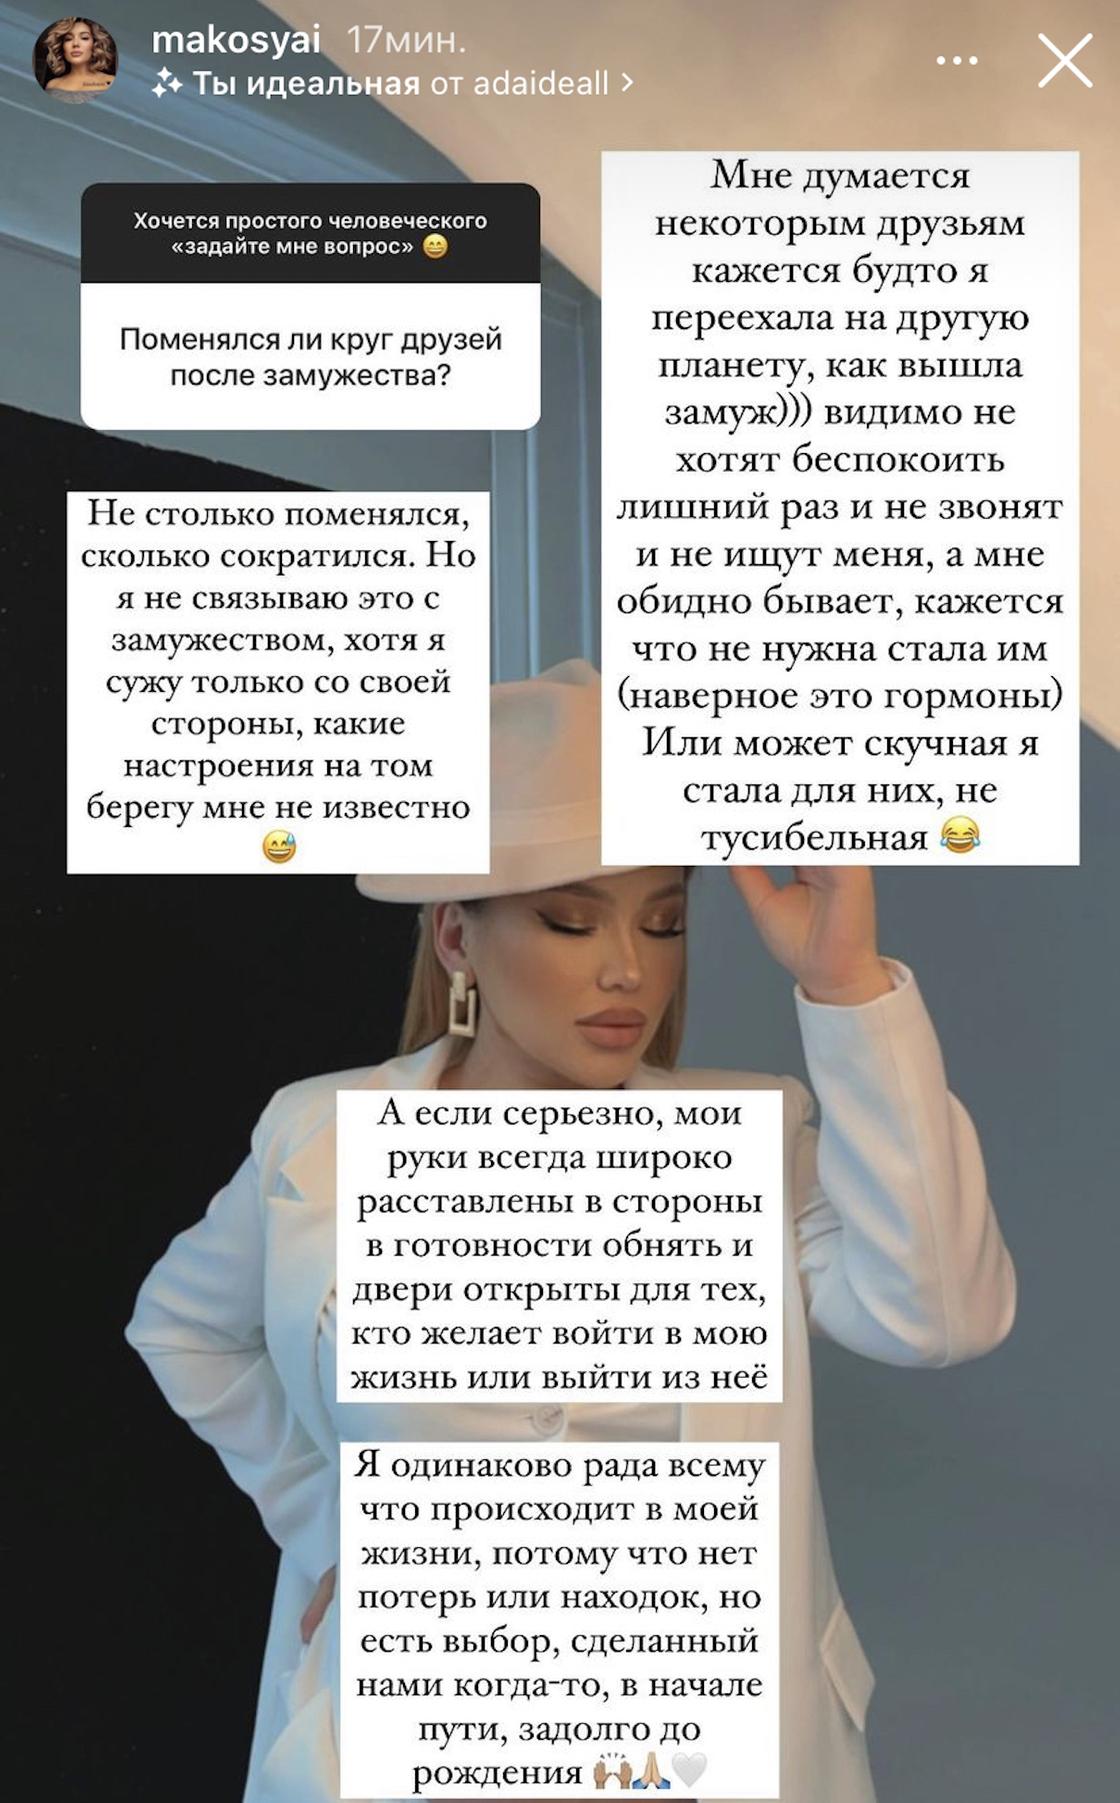 Story Макпал Исабековой